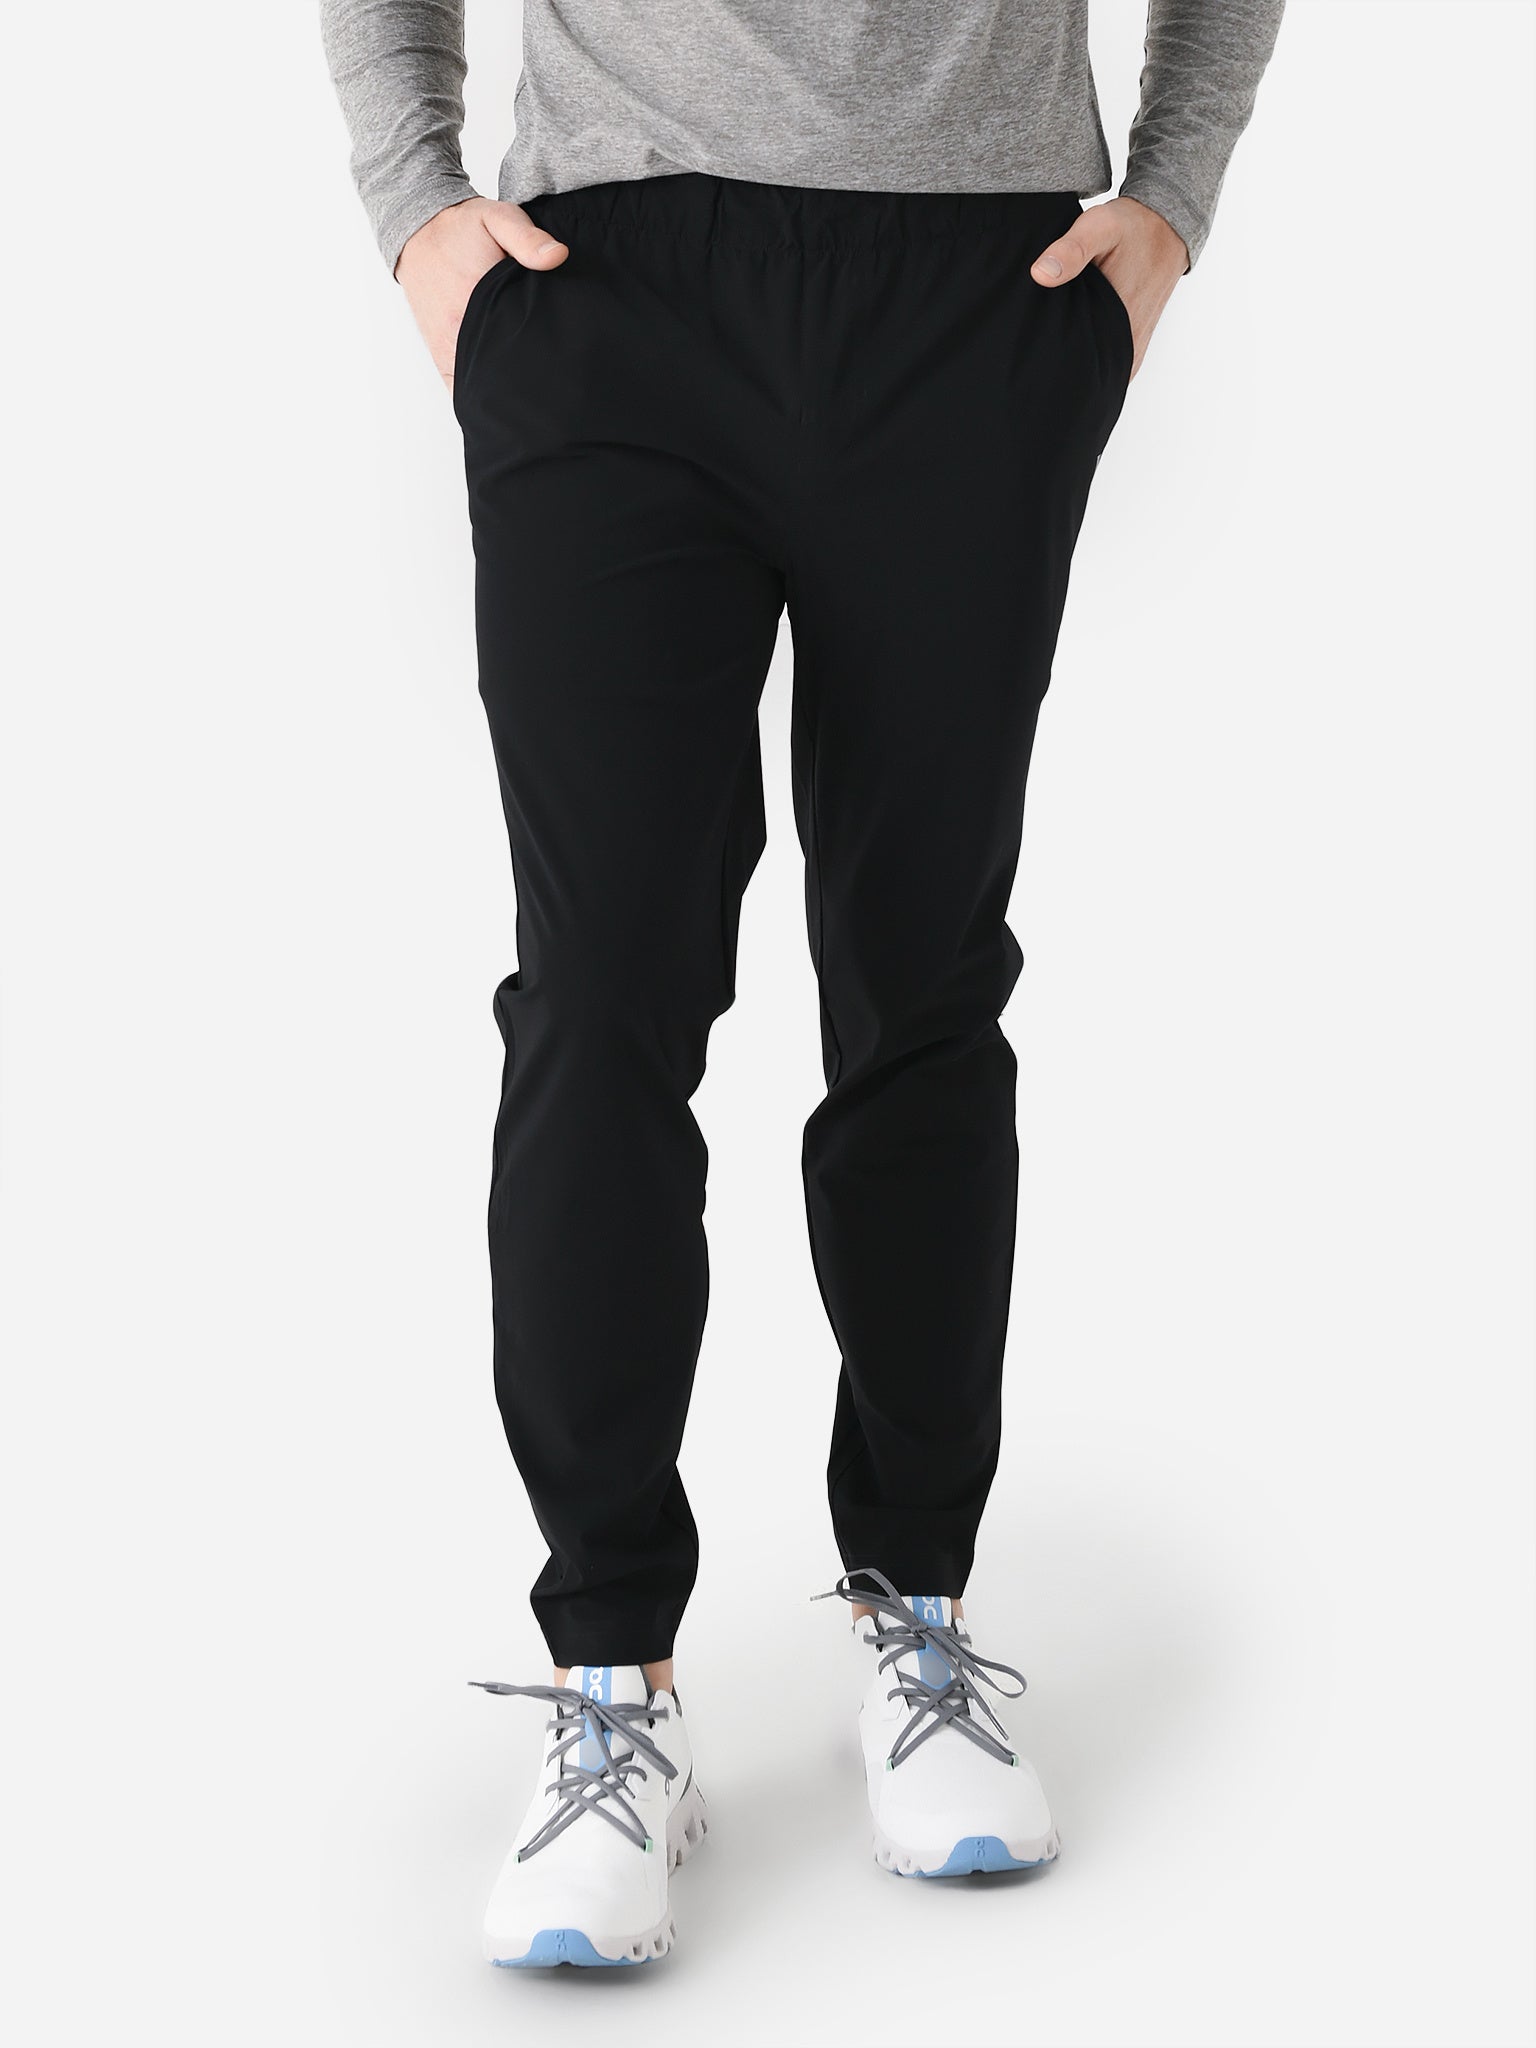 Lululemon Surge Jogger 29 Running Pants - Men's Small ~ $118.00 Black